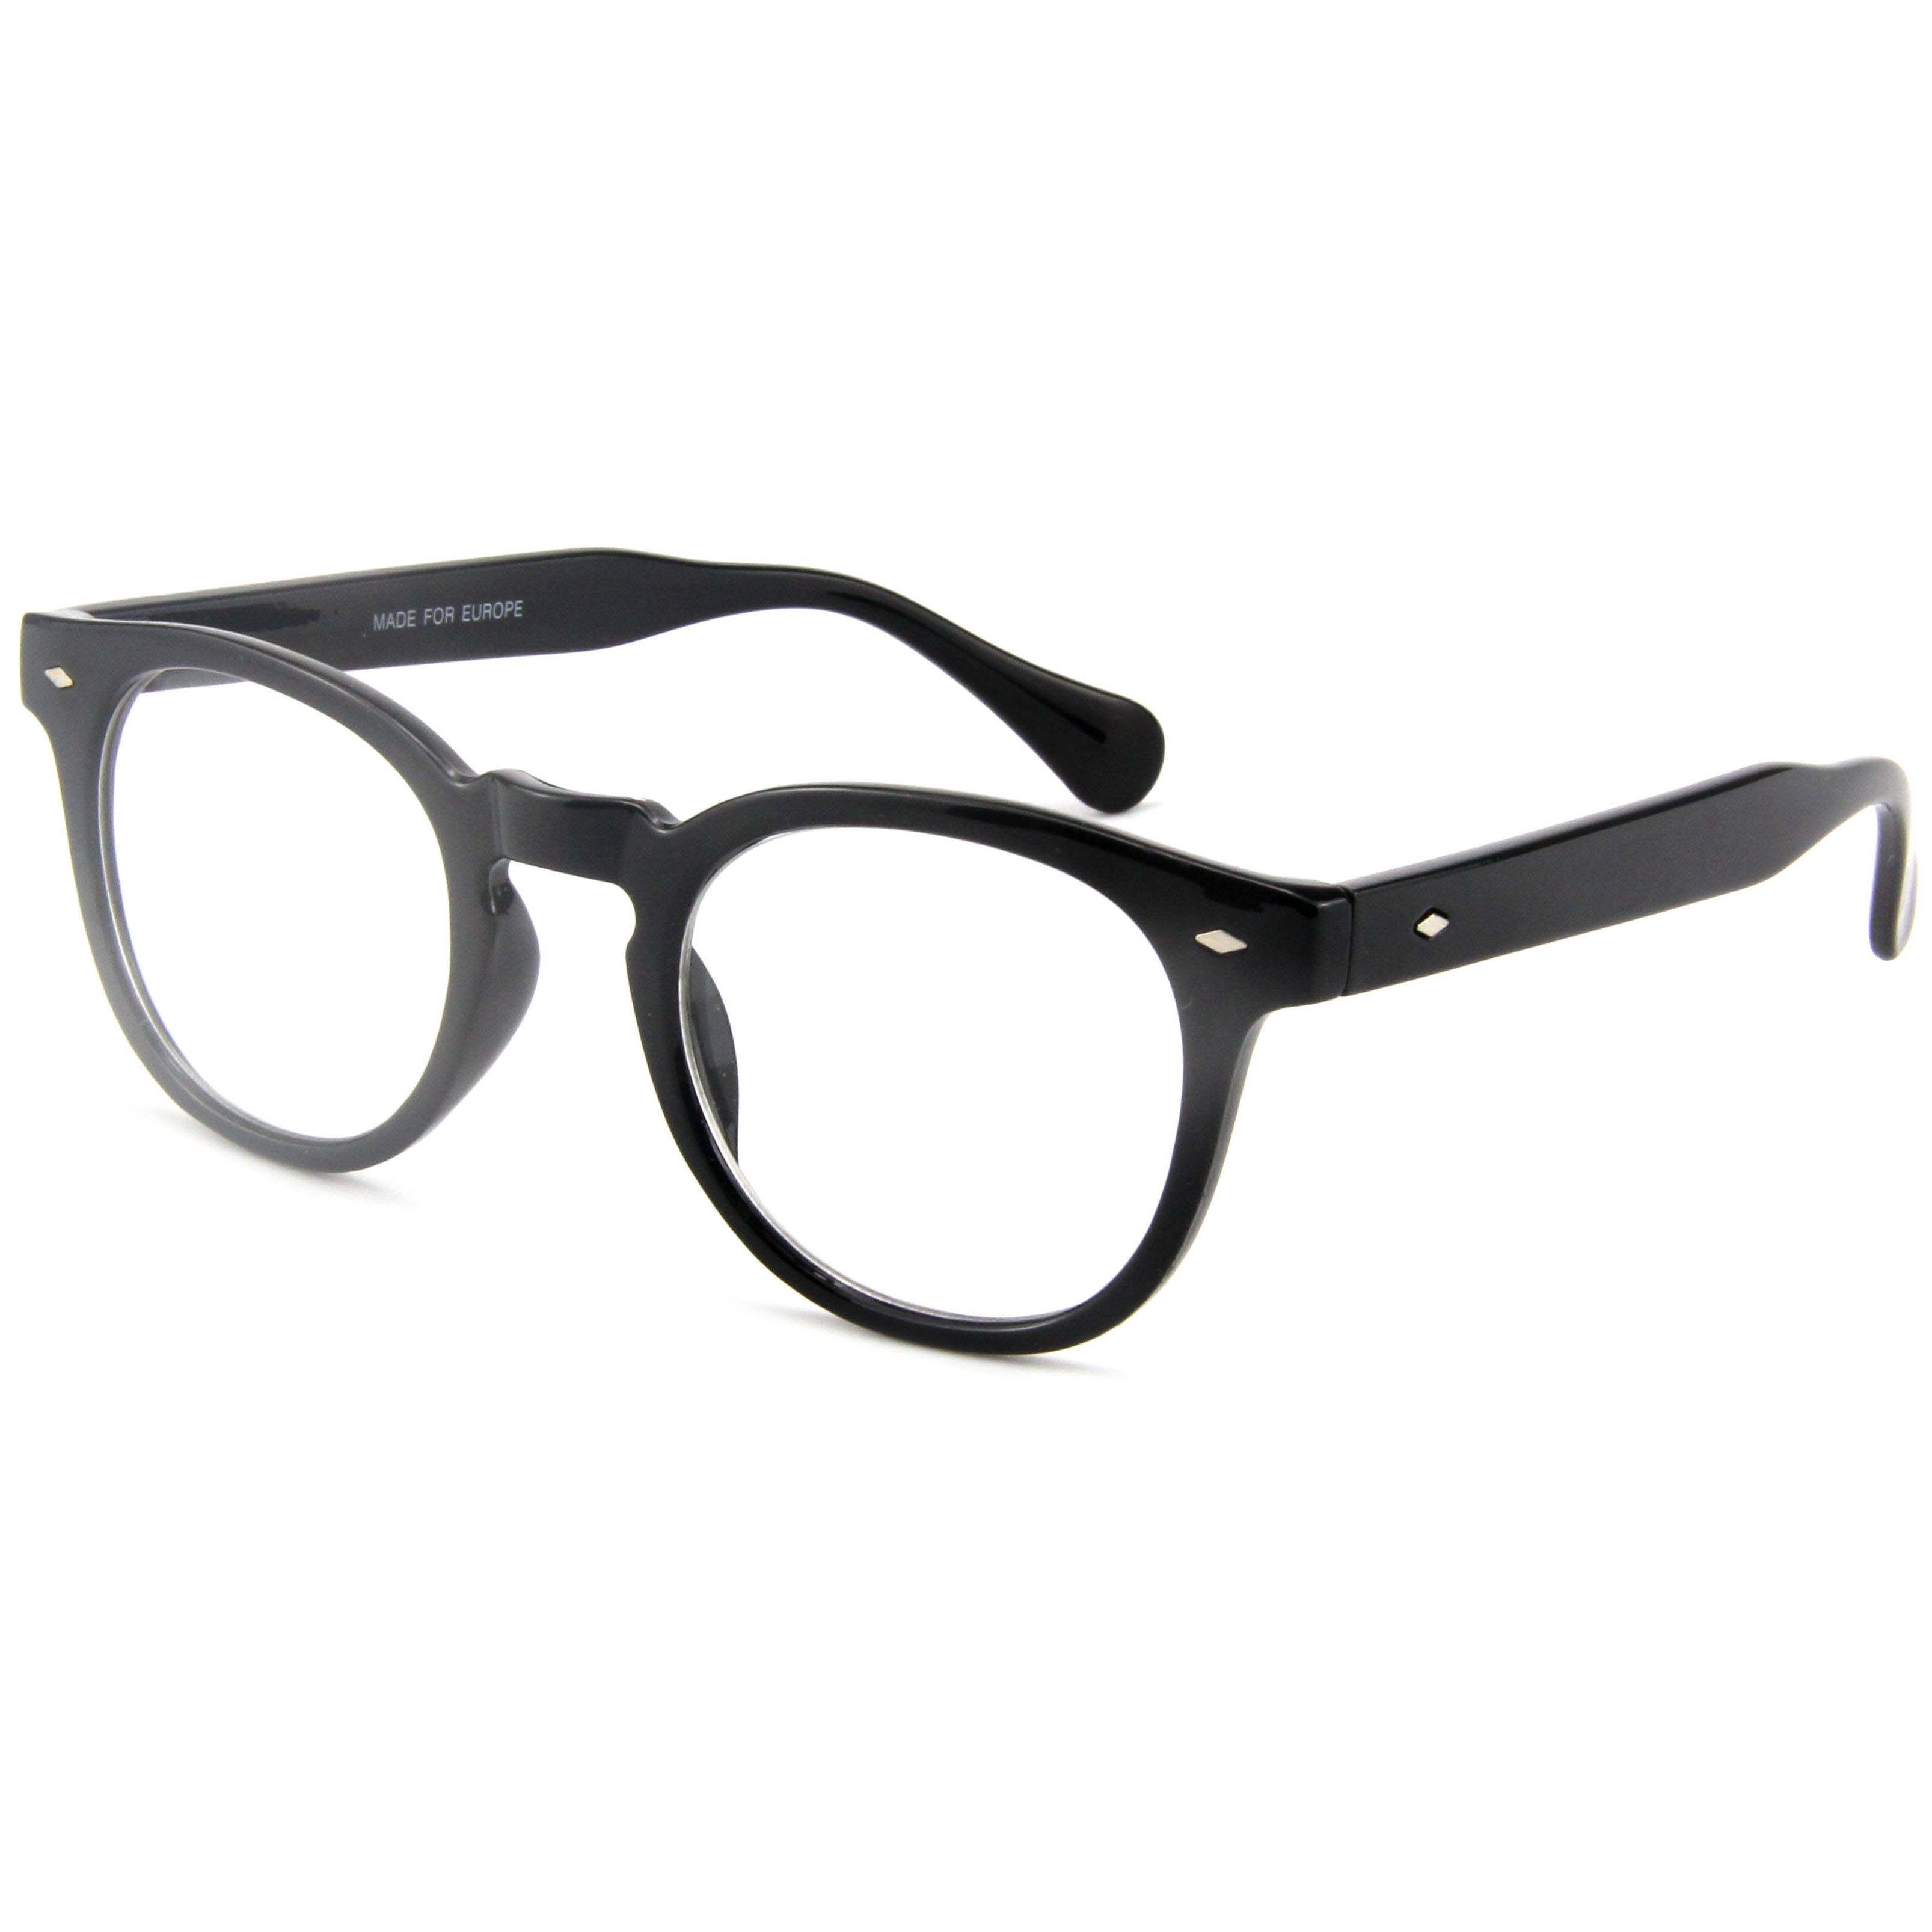 fashion optical glasses vendor For optical frame glasses-2